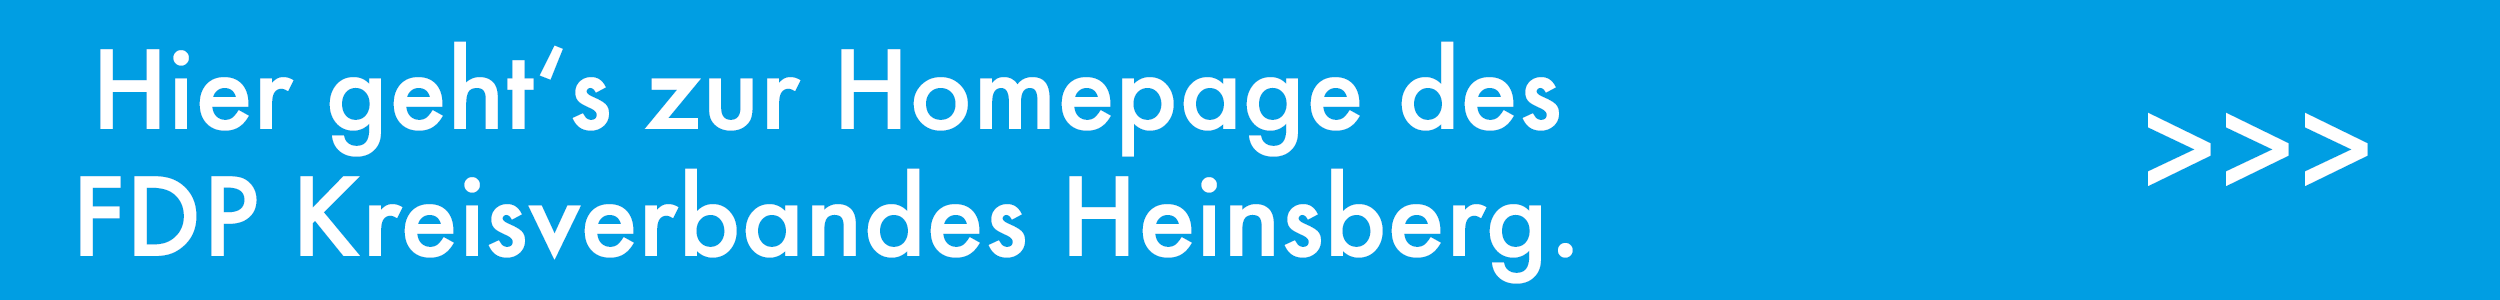 Link zur Homepage des FDP Kreisverband Heinsberg